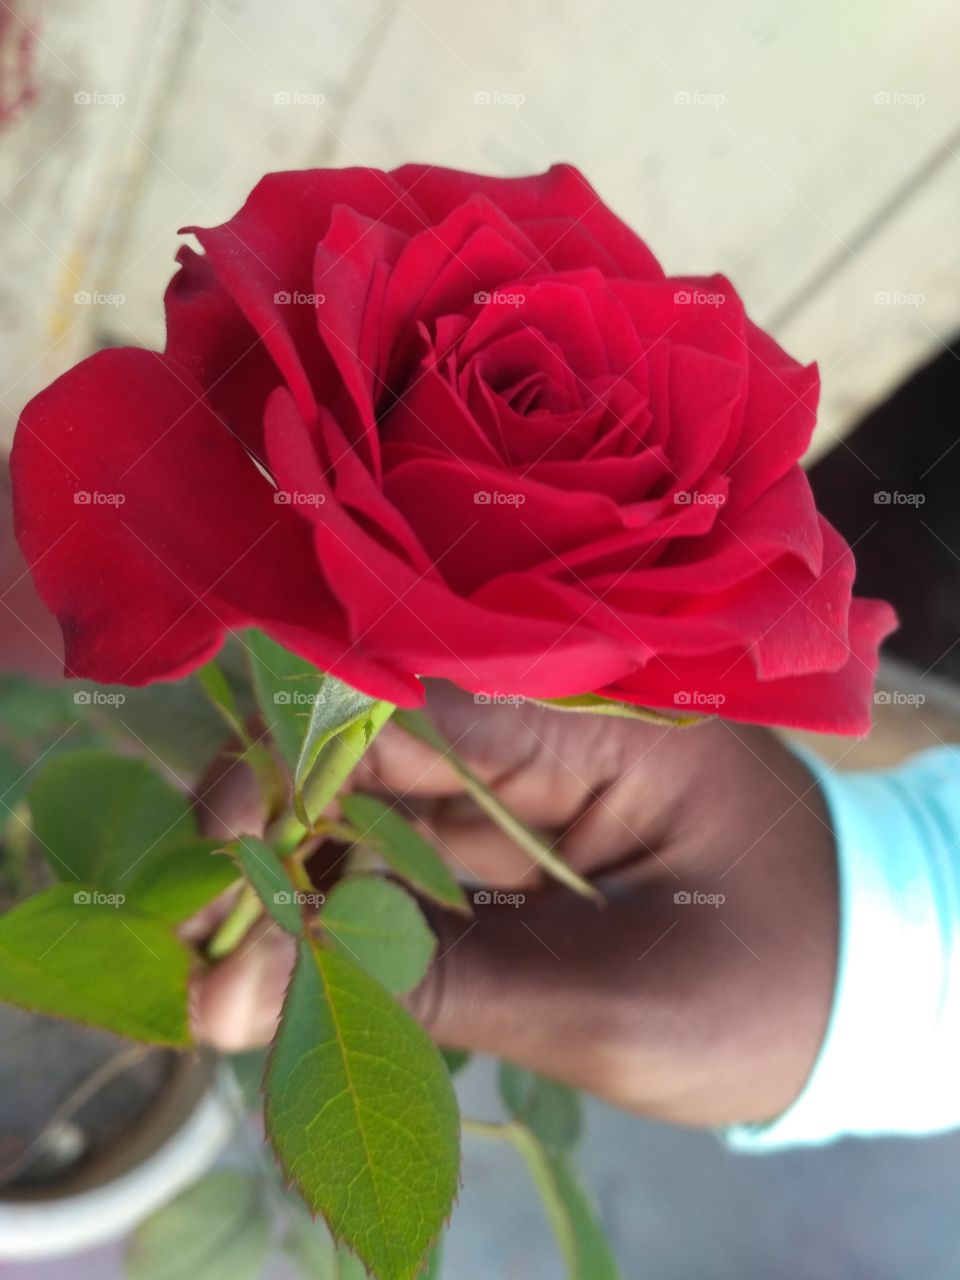 Holly rose